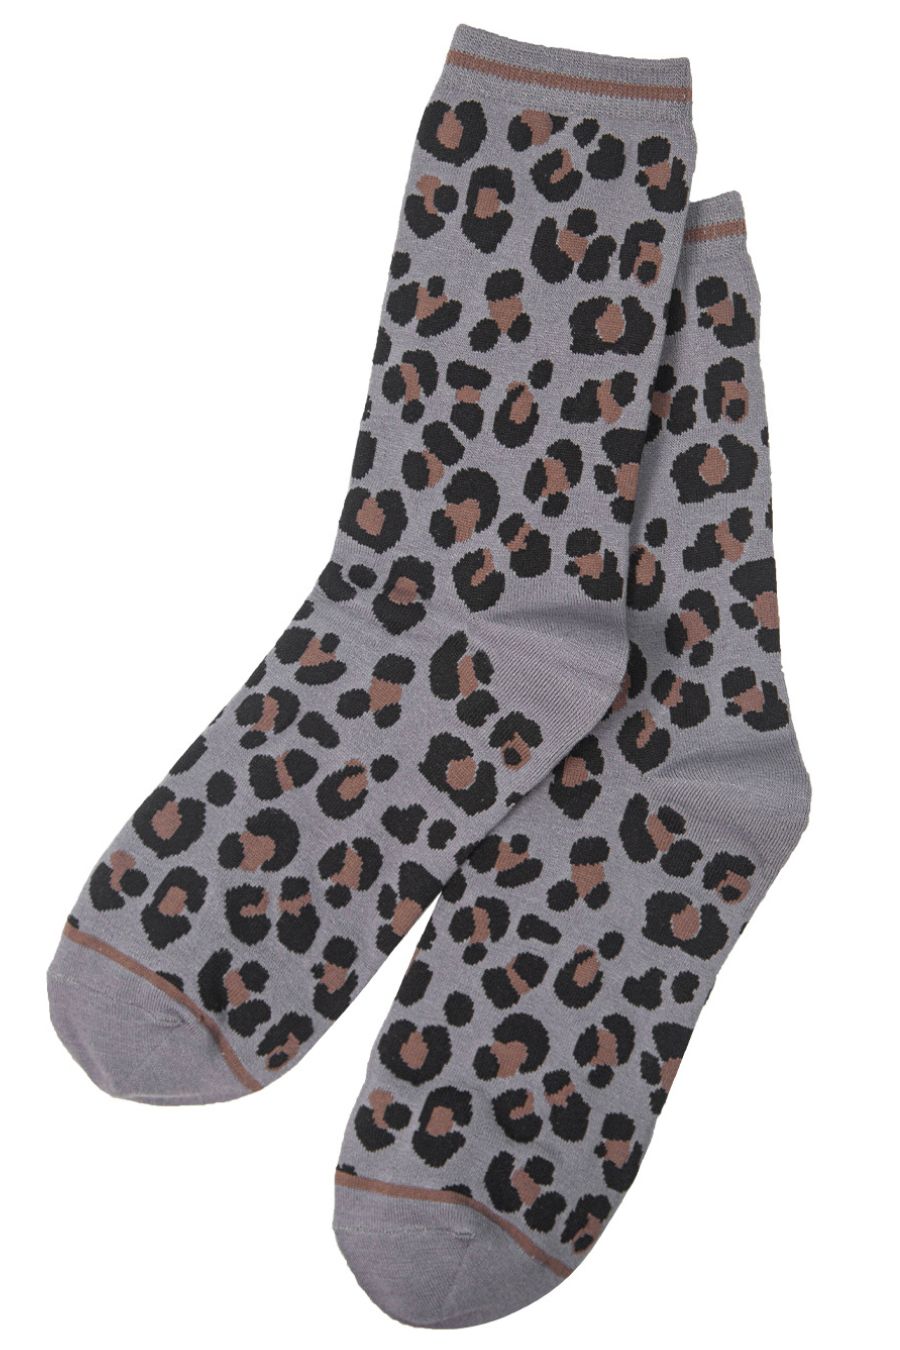 grey, brown and black leopard print ankle socks 